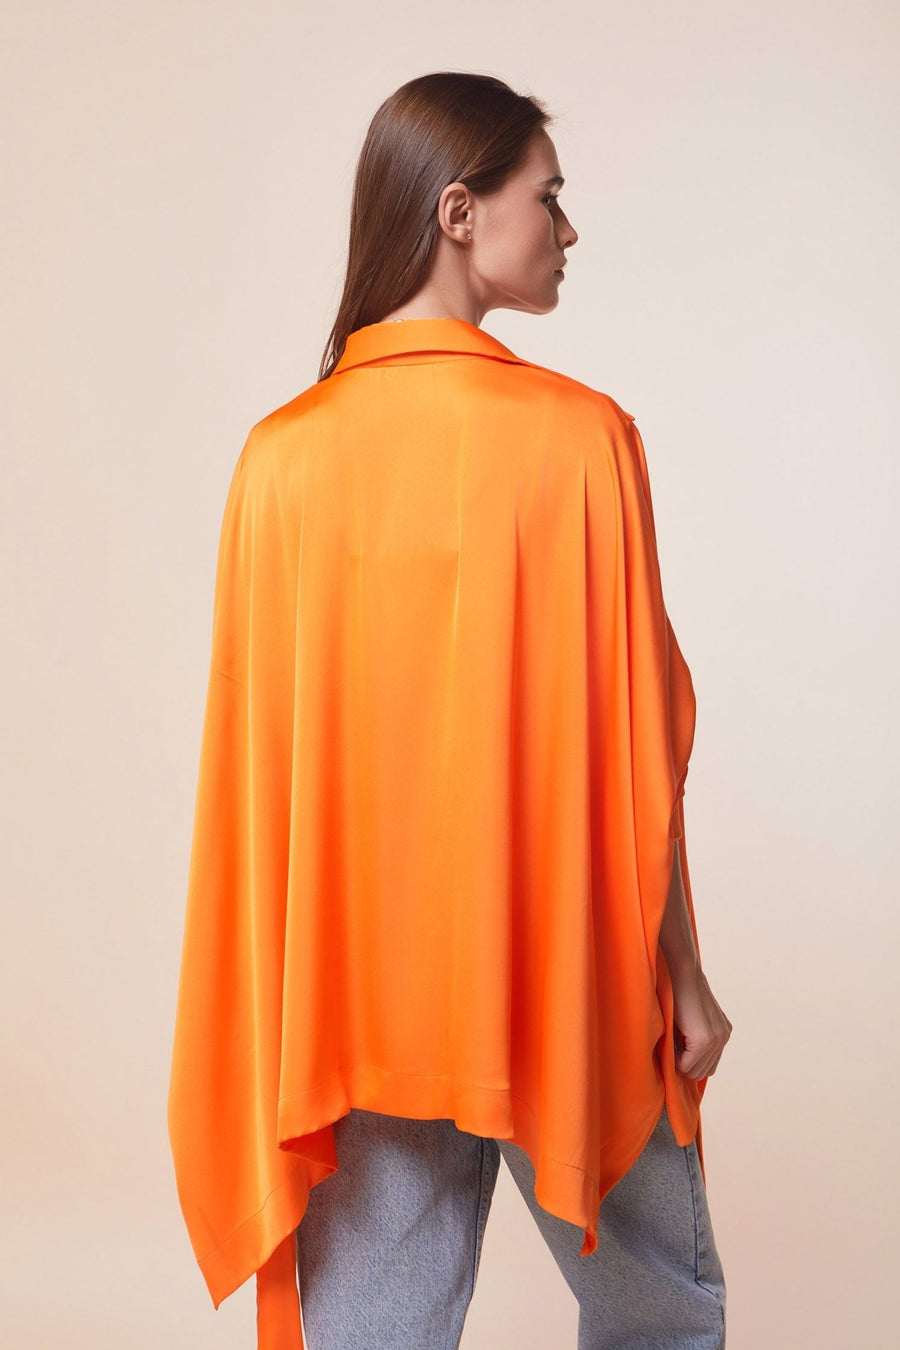 Orange Satin High & Low side knotted shirt - nahlaelalfydesigns